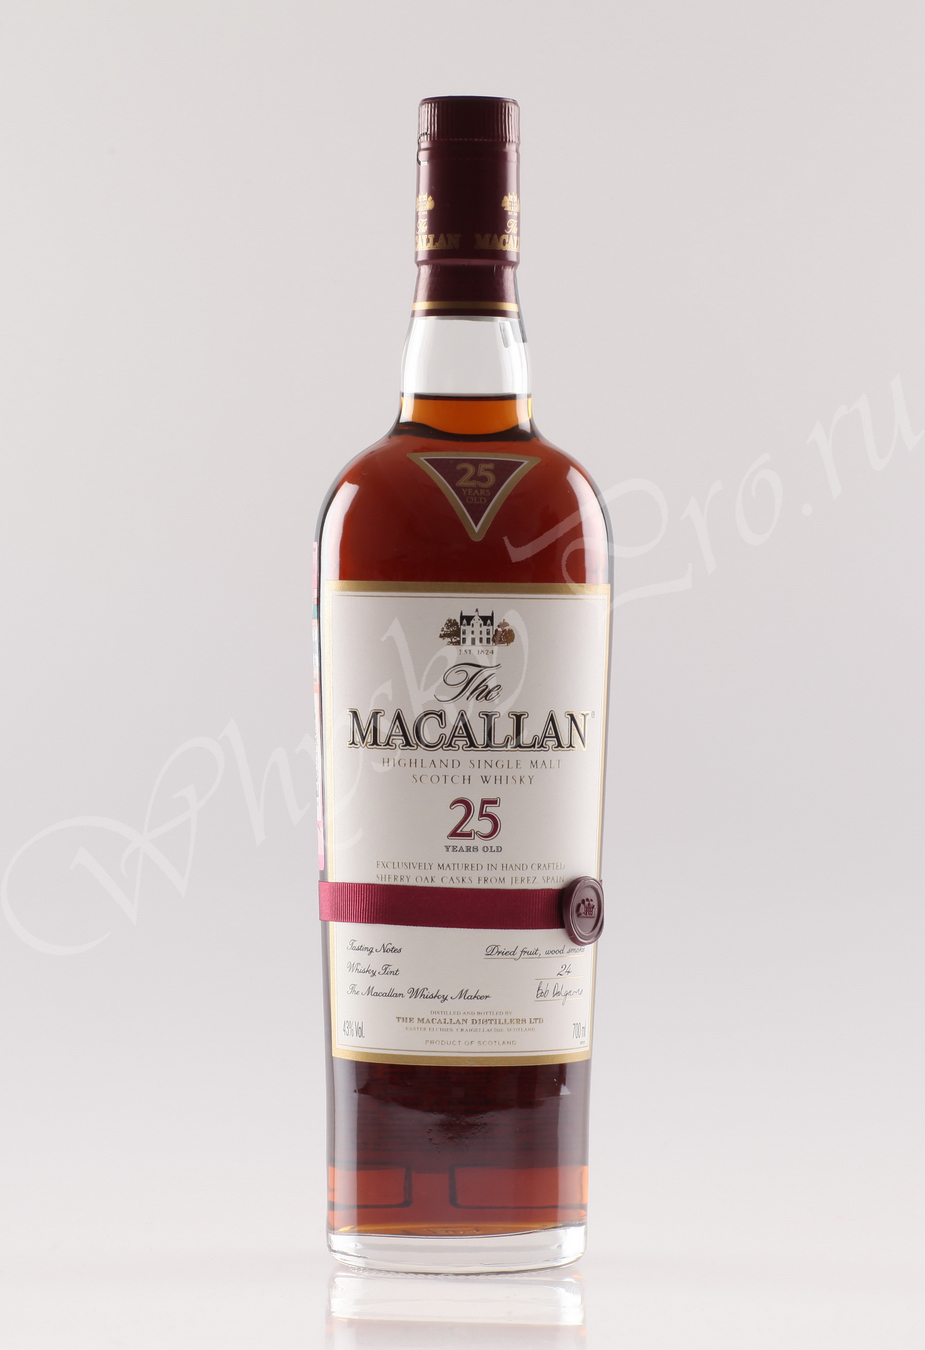 Macallan 25 years